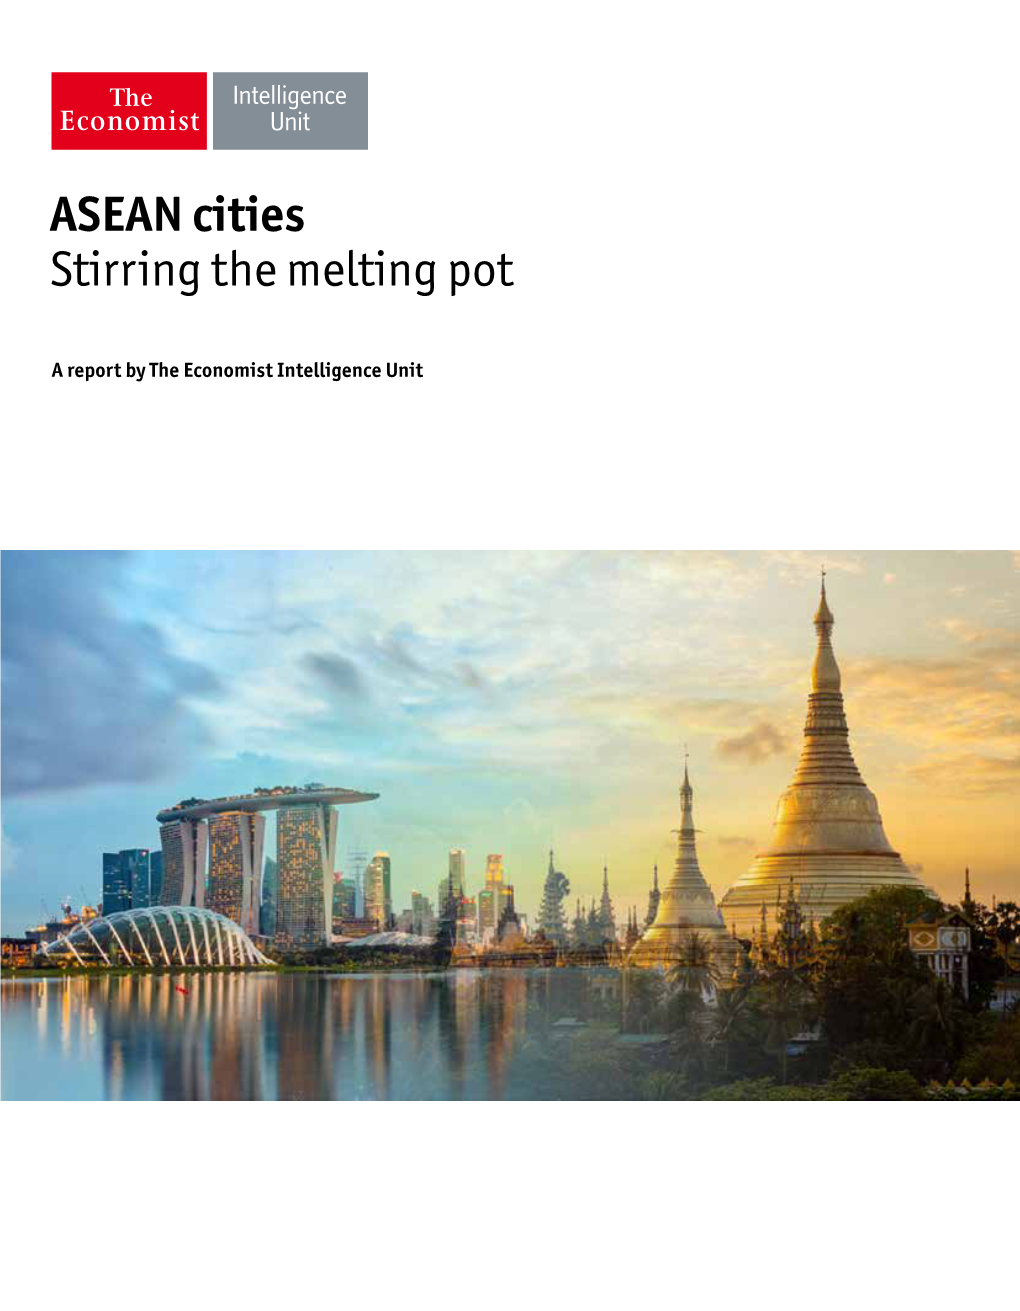 ASEAN Cities Stirring the Melting Pot